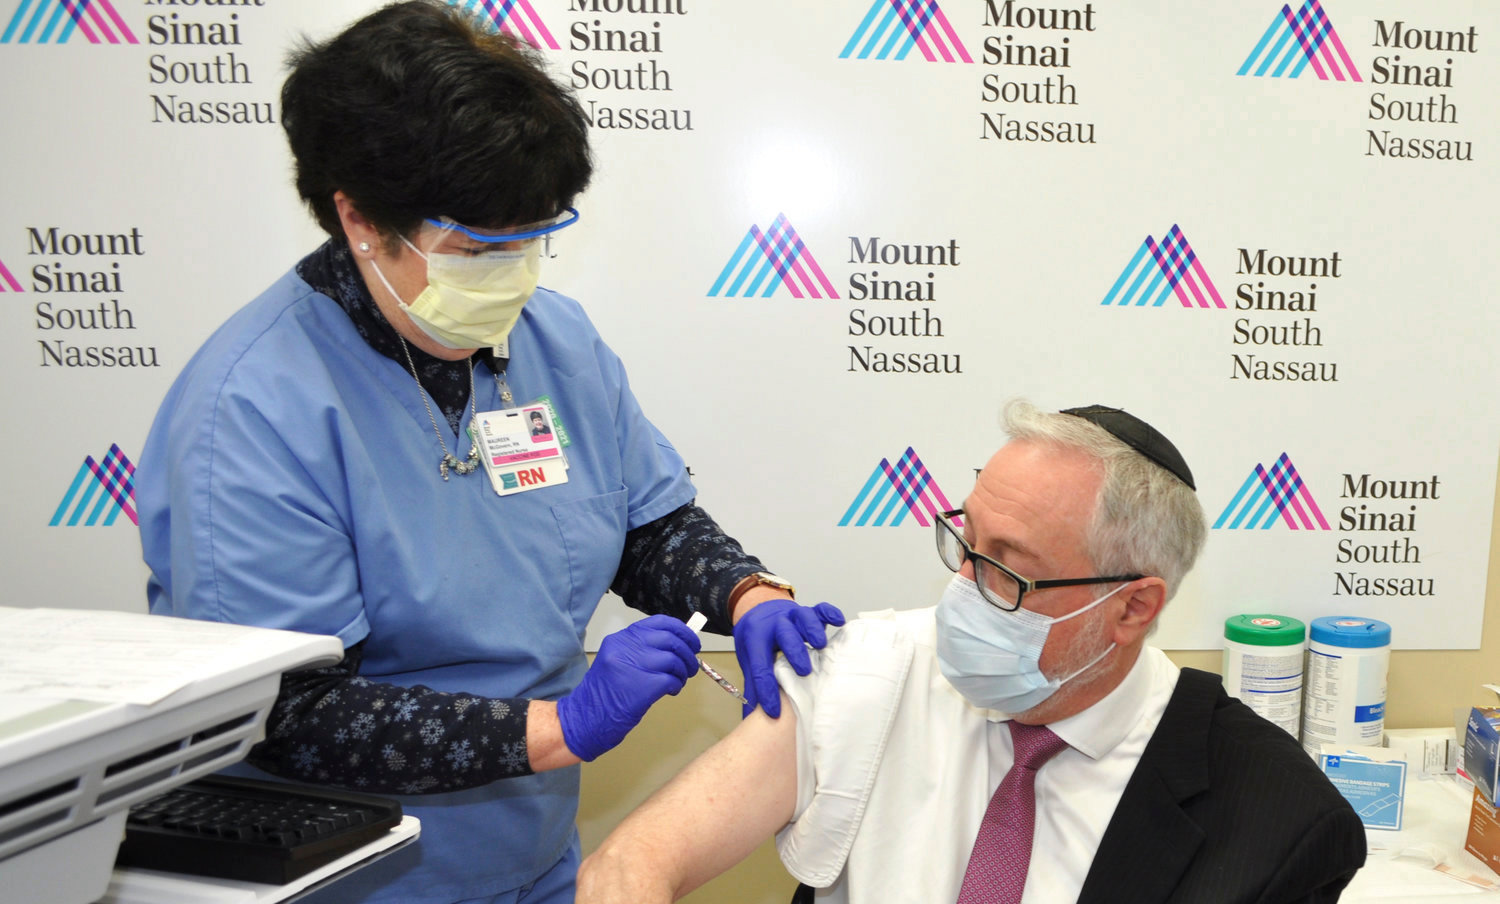 Rabbi Dr. Aaron E. Glatt is pictured receiving a Covid-19 vaccine at Mount Sinai South Nassau.